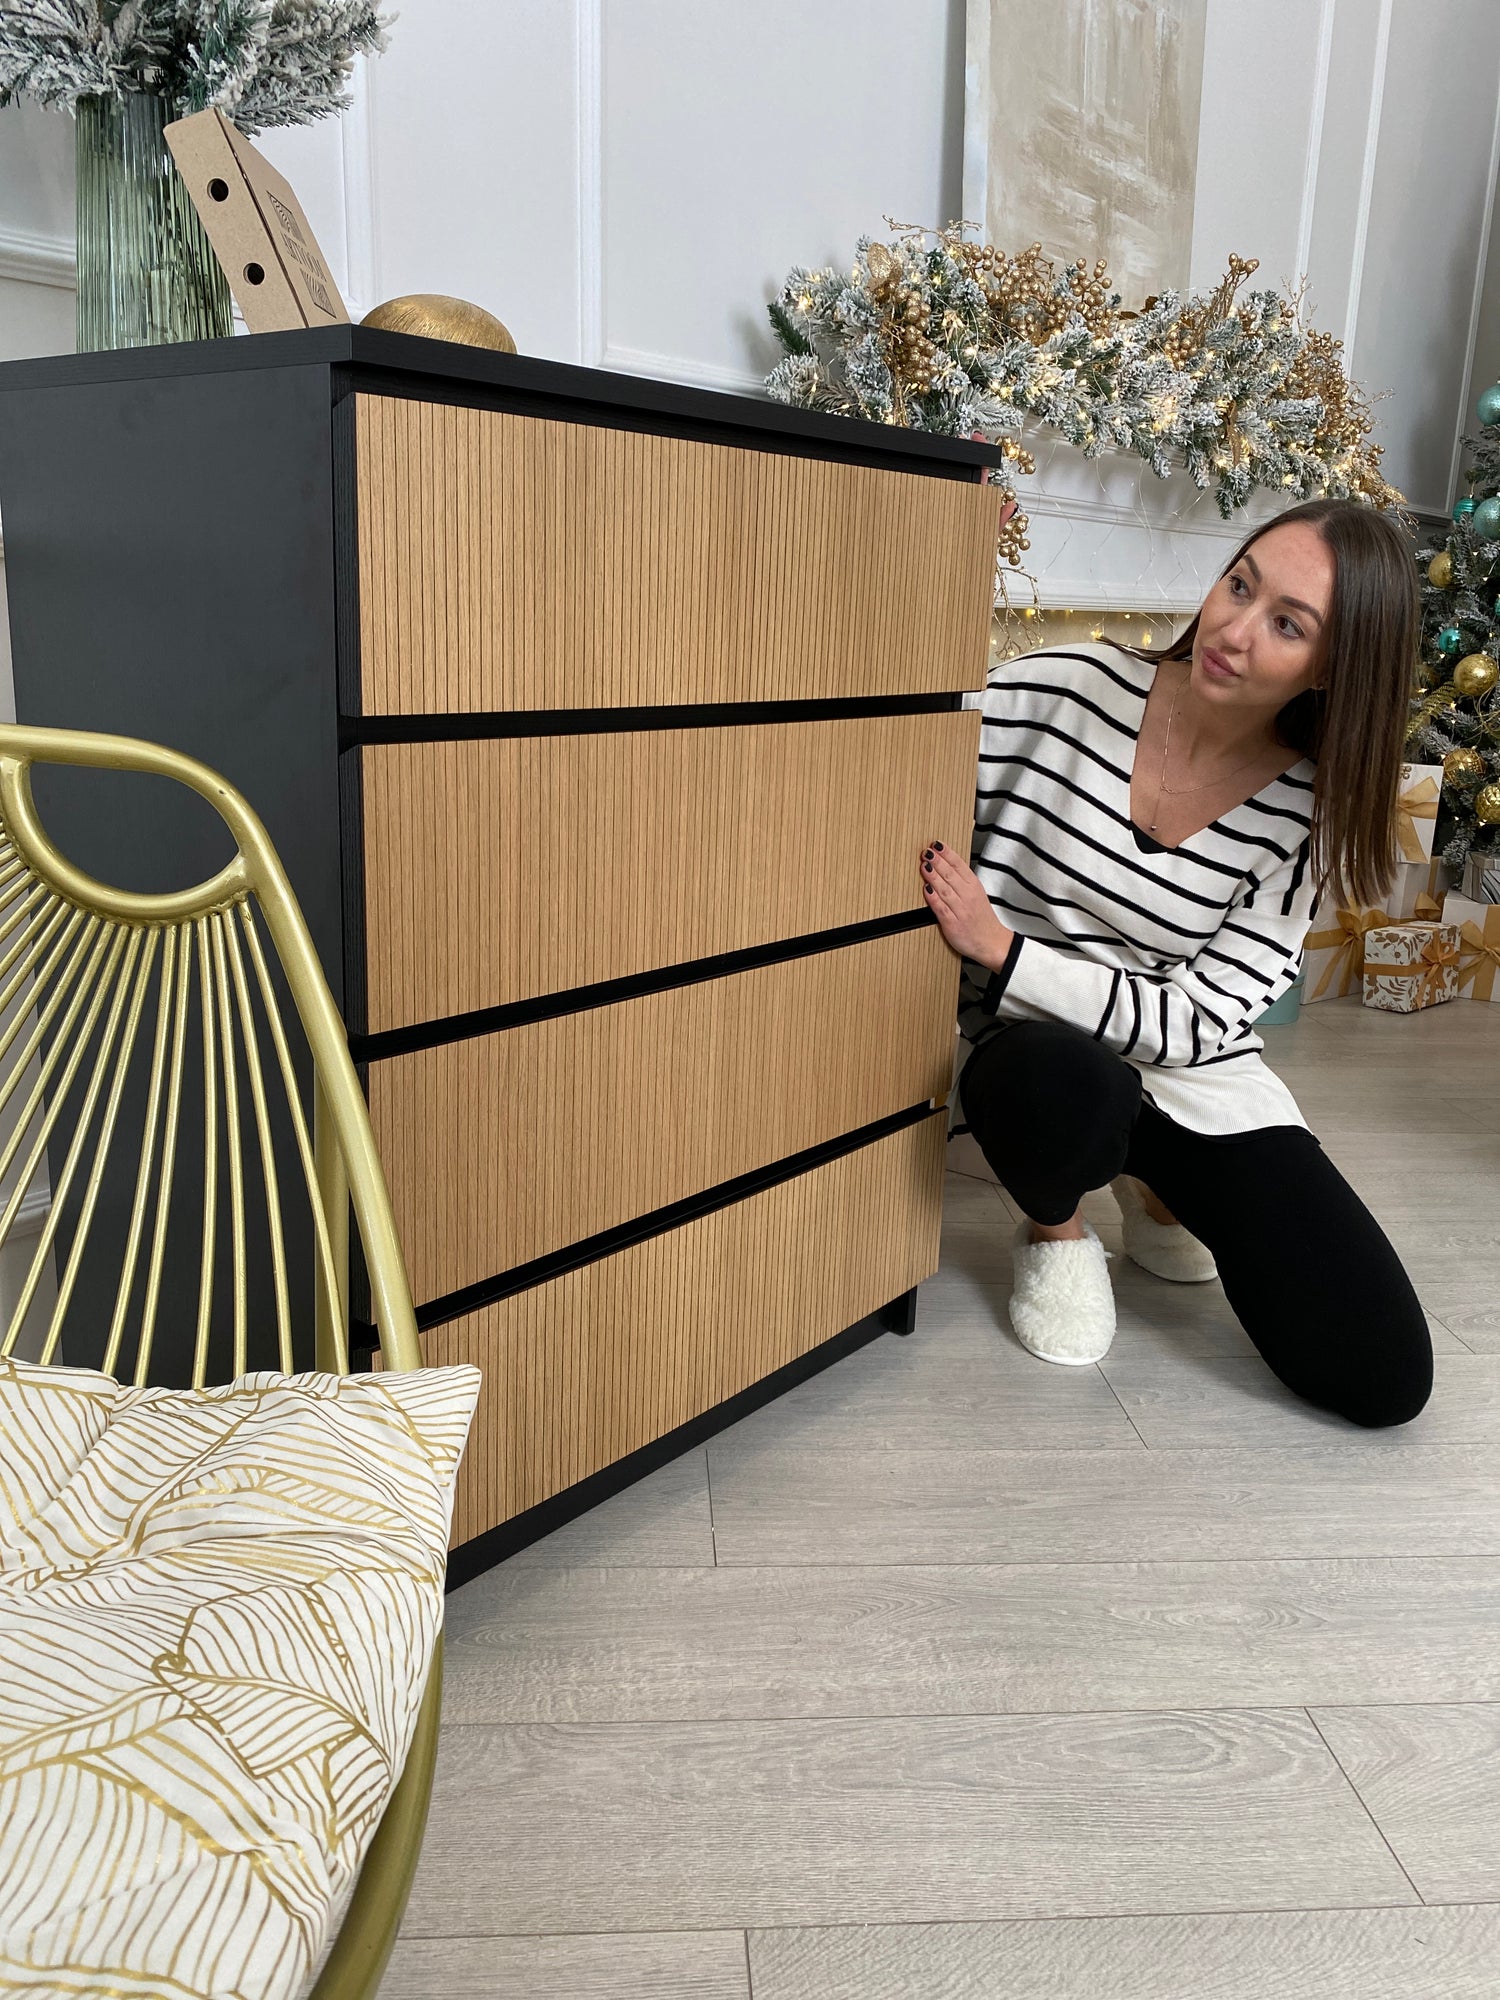 Ikea Hacks: Why Customers Transform Their Furniture with ARTVOOM overlay